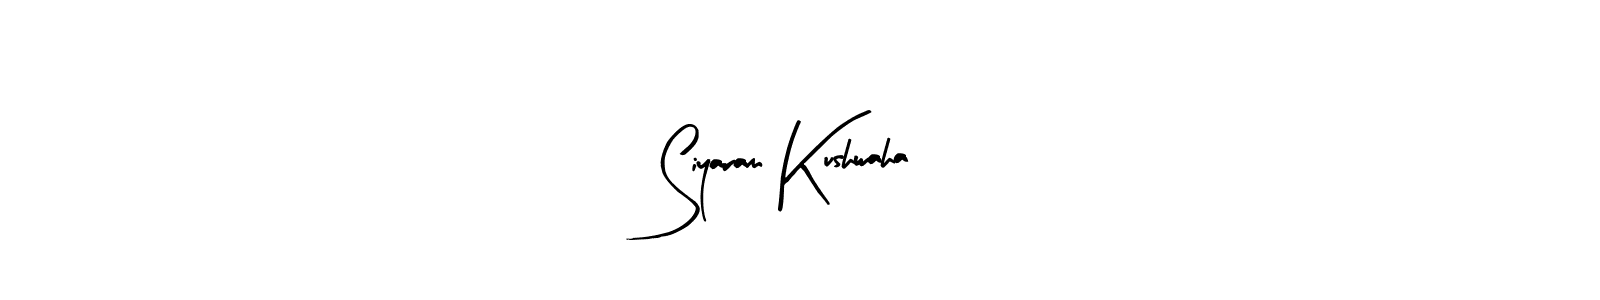 How to make Siyaram Kushwaha signature? Arty Signature is a professional autograph style. Create handwritten signature for Siyaram Kushwaha name. Siyaram Kushwaha signature style 8 images and pictures png